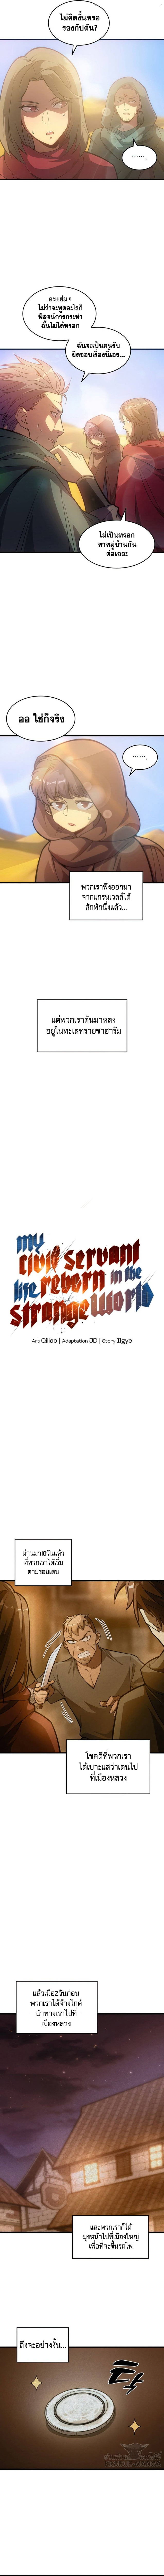 My Civil Servant Life Reborn In The Strange World03